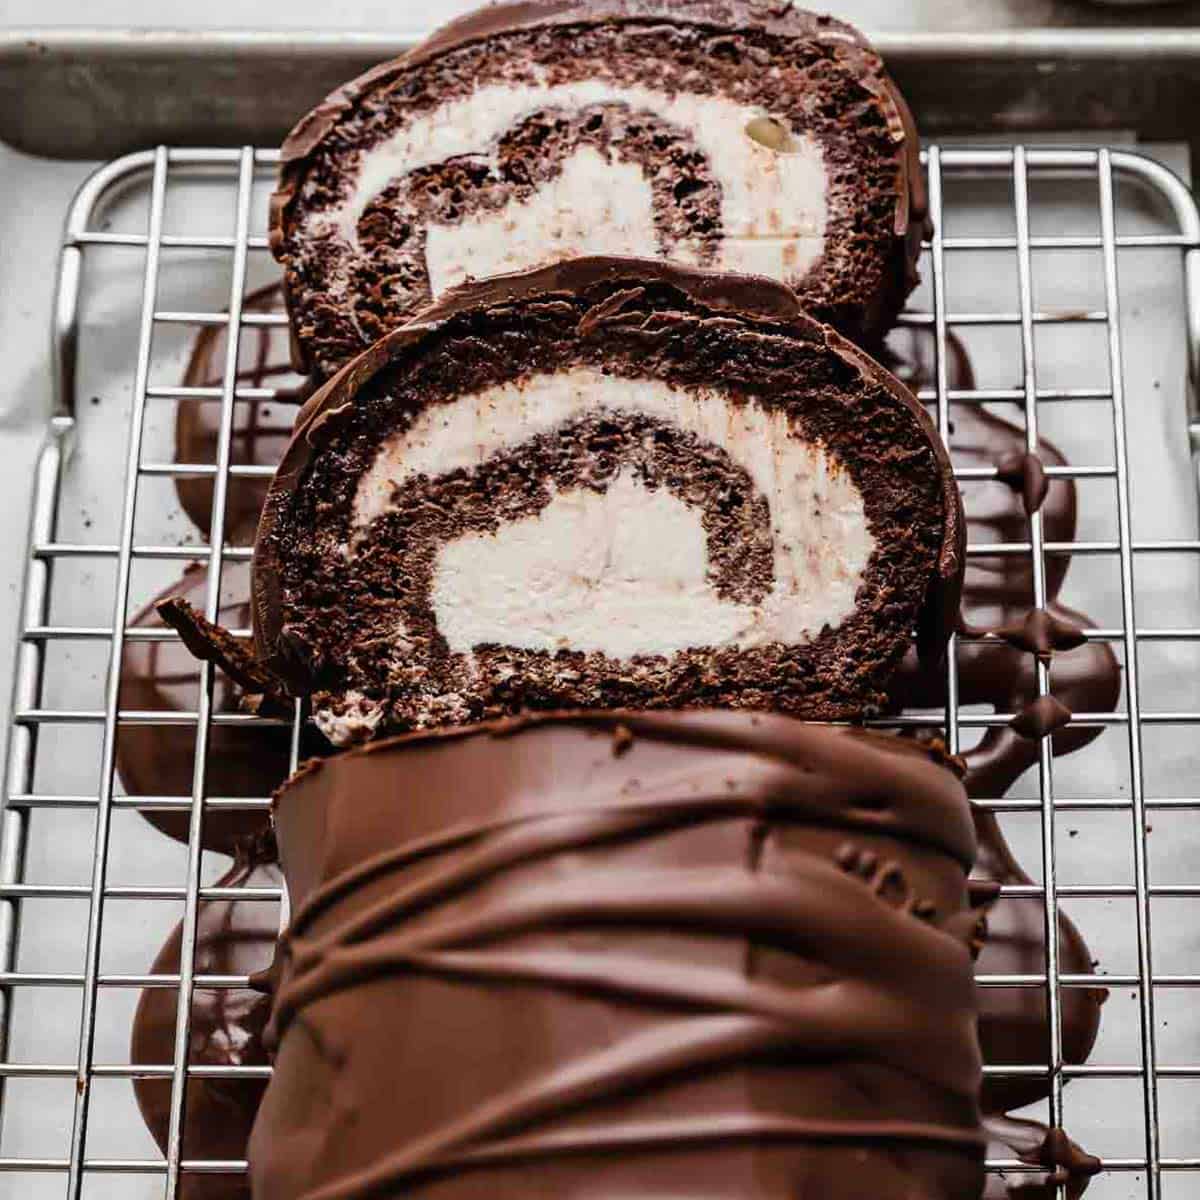 Chocolate Ice Cream Roll Cake Recipe 